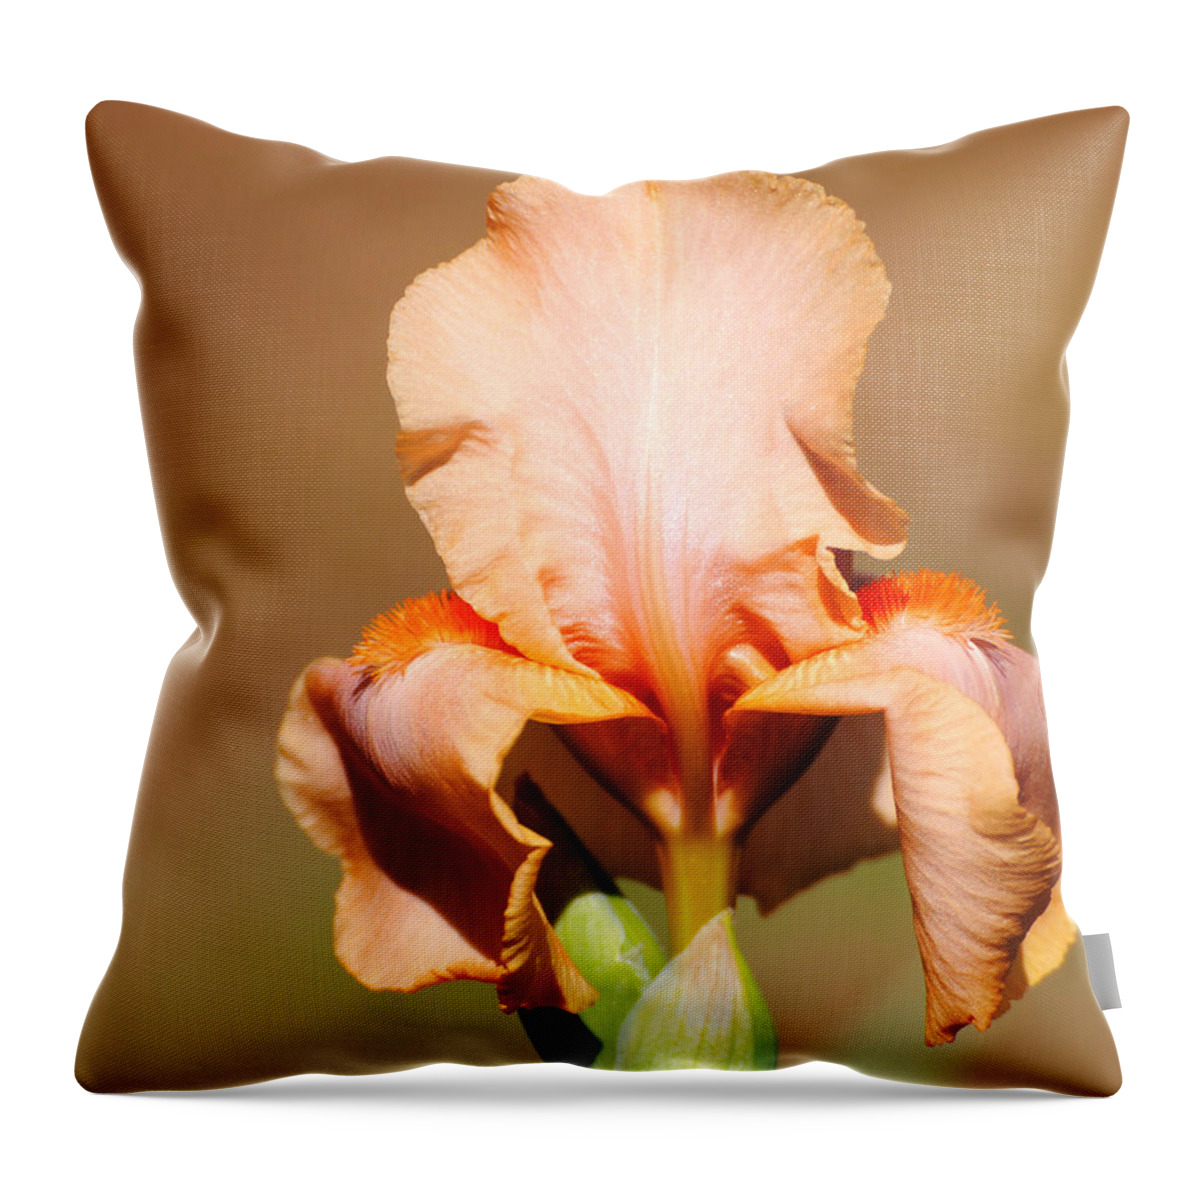 Beautiful Iris Throw Pillow featuring the photograph Peach Iris Flower by Jai Johnson